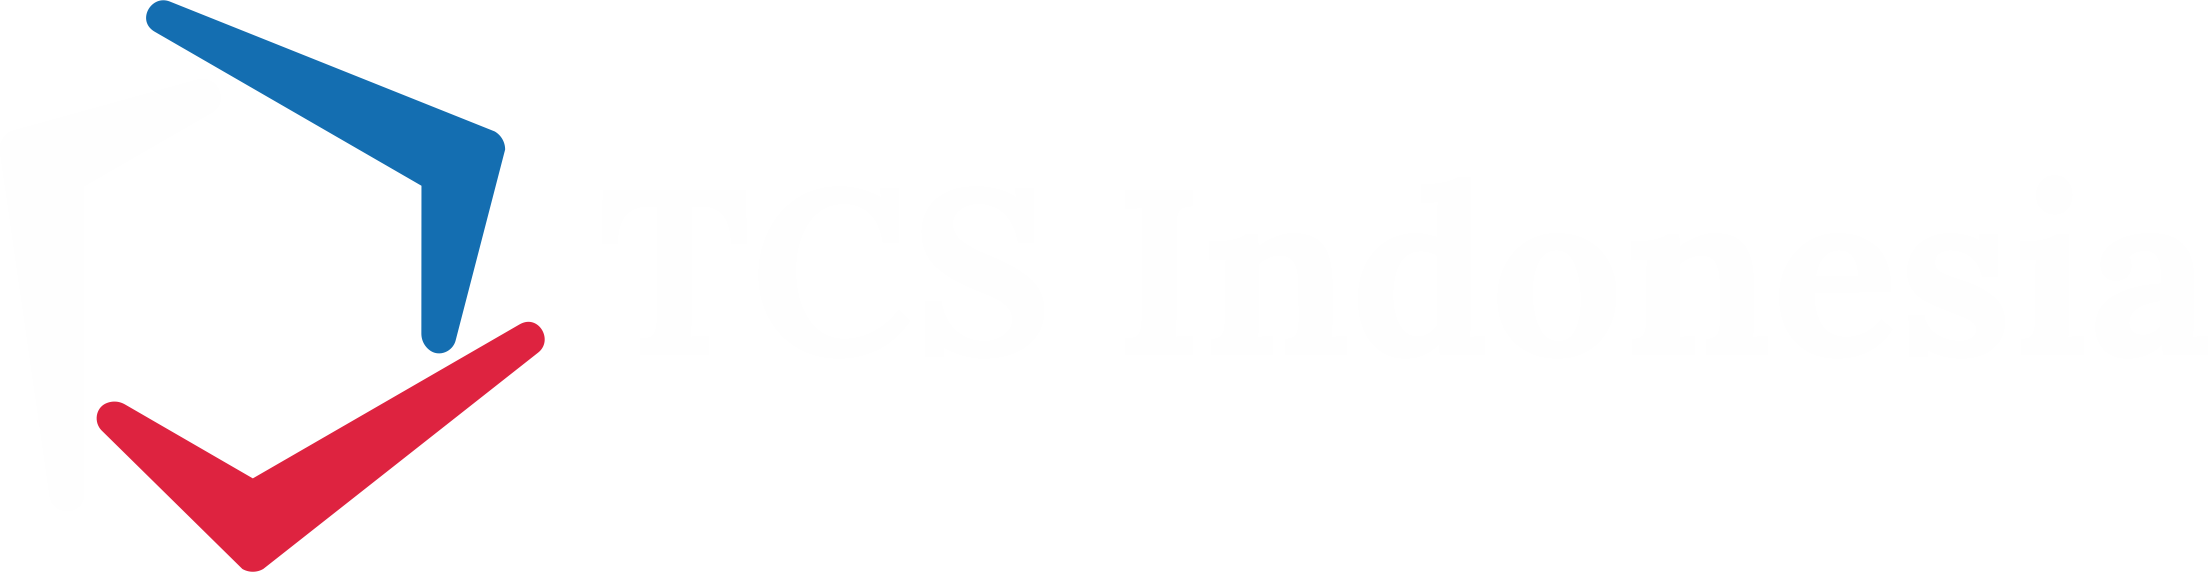 TCS Indonesia